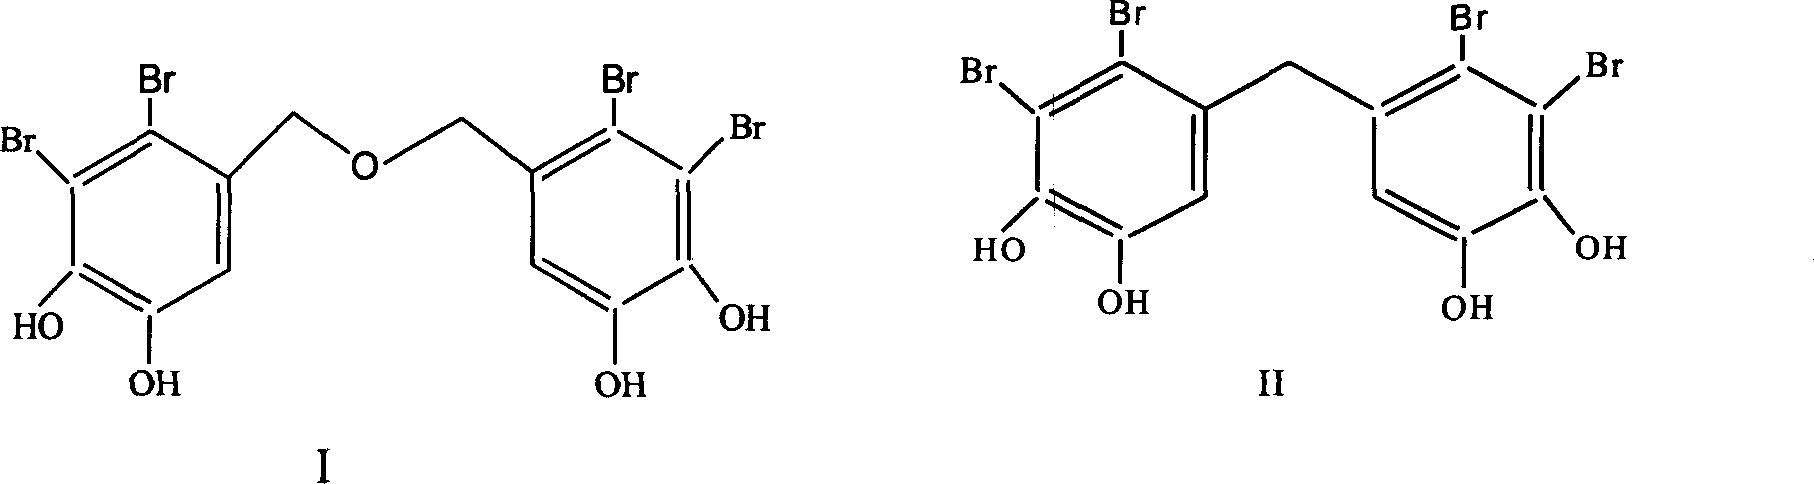 Use of bromphenol compound in protein-tyrosine phosphonatease inhibitor